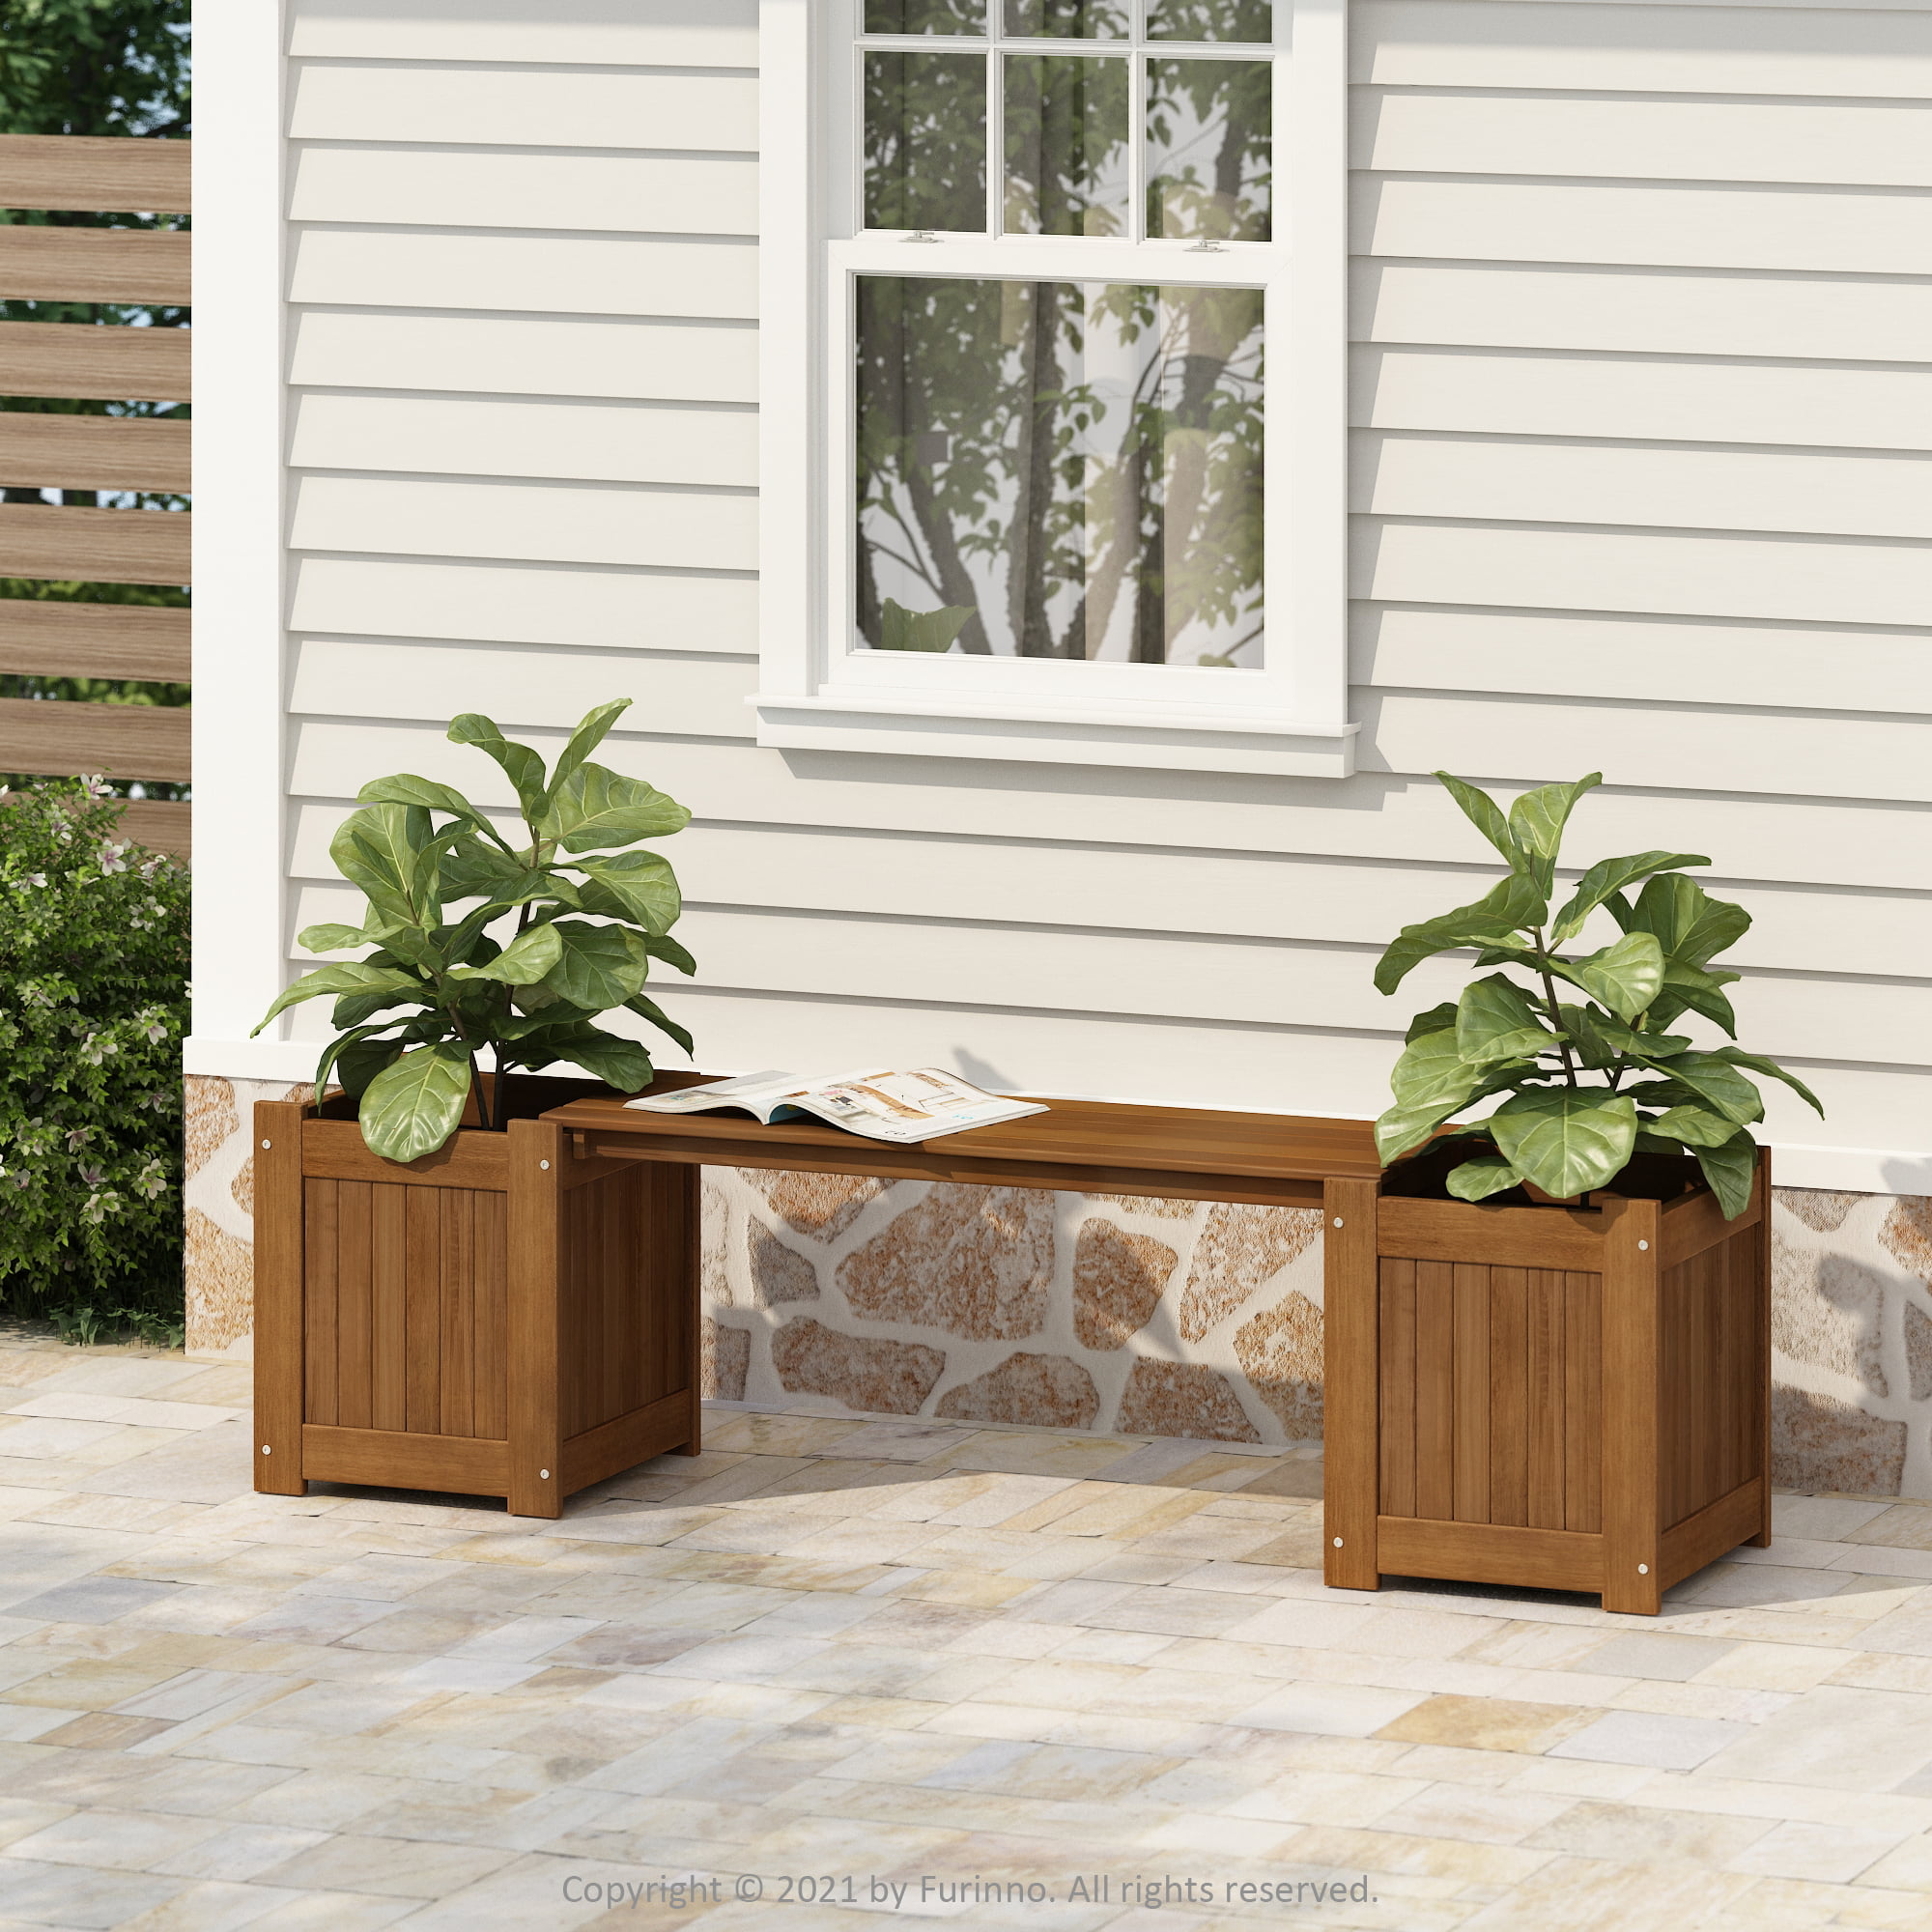 Furinno Planter Box Wood Bench Seat Plant Flower Vegetable Hardwood Brown Teak 